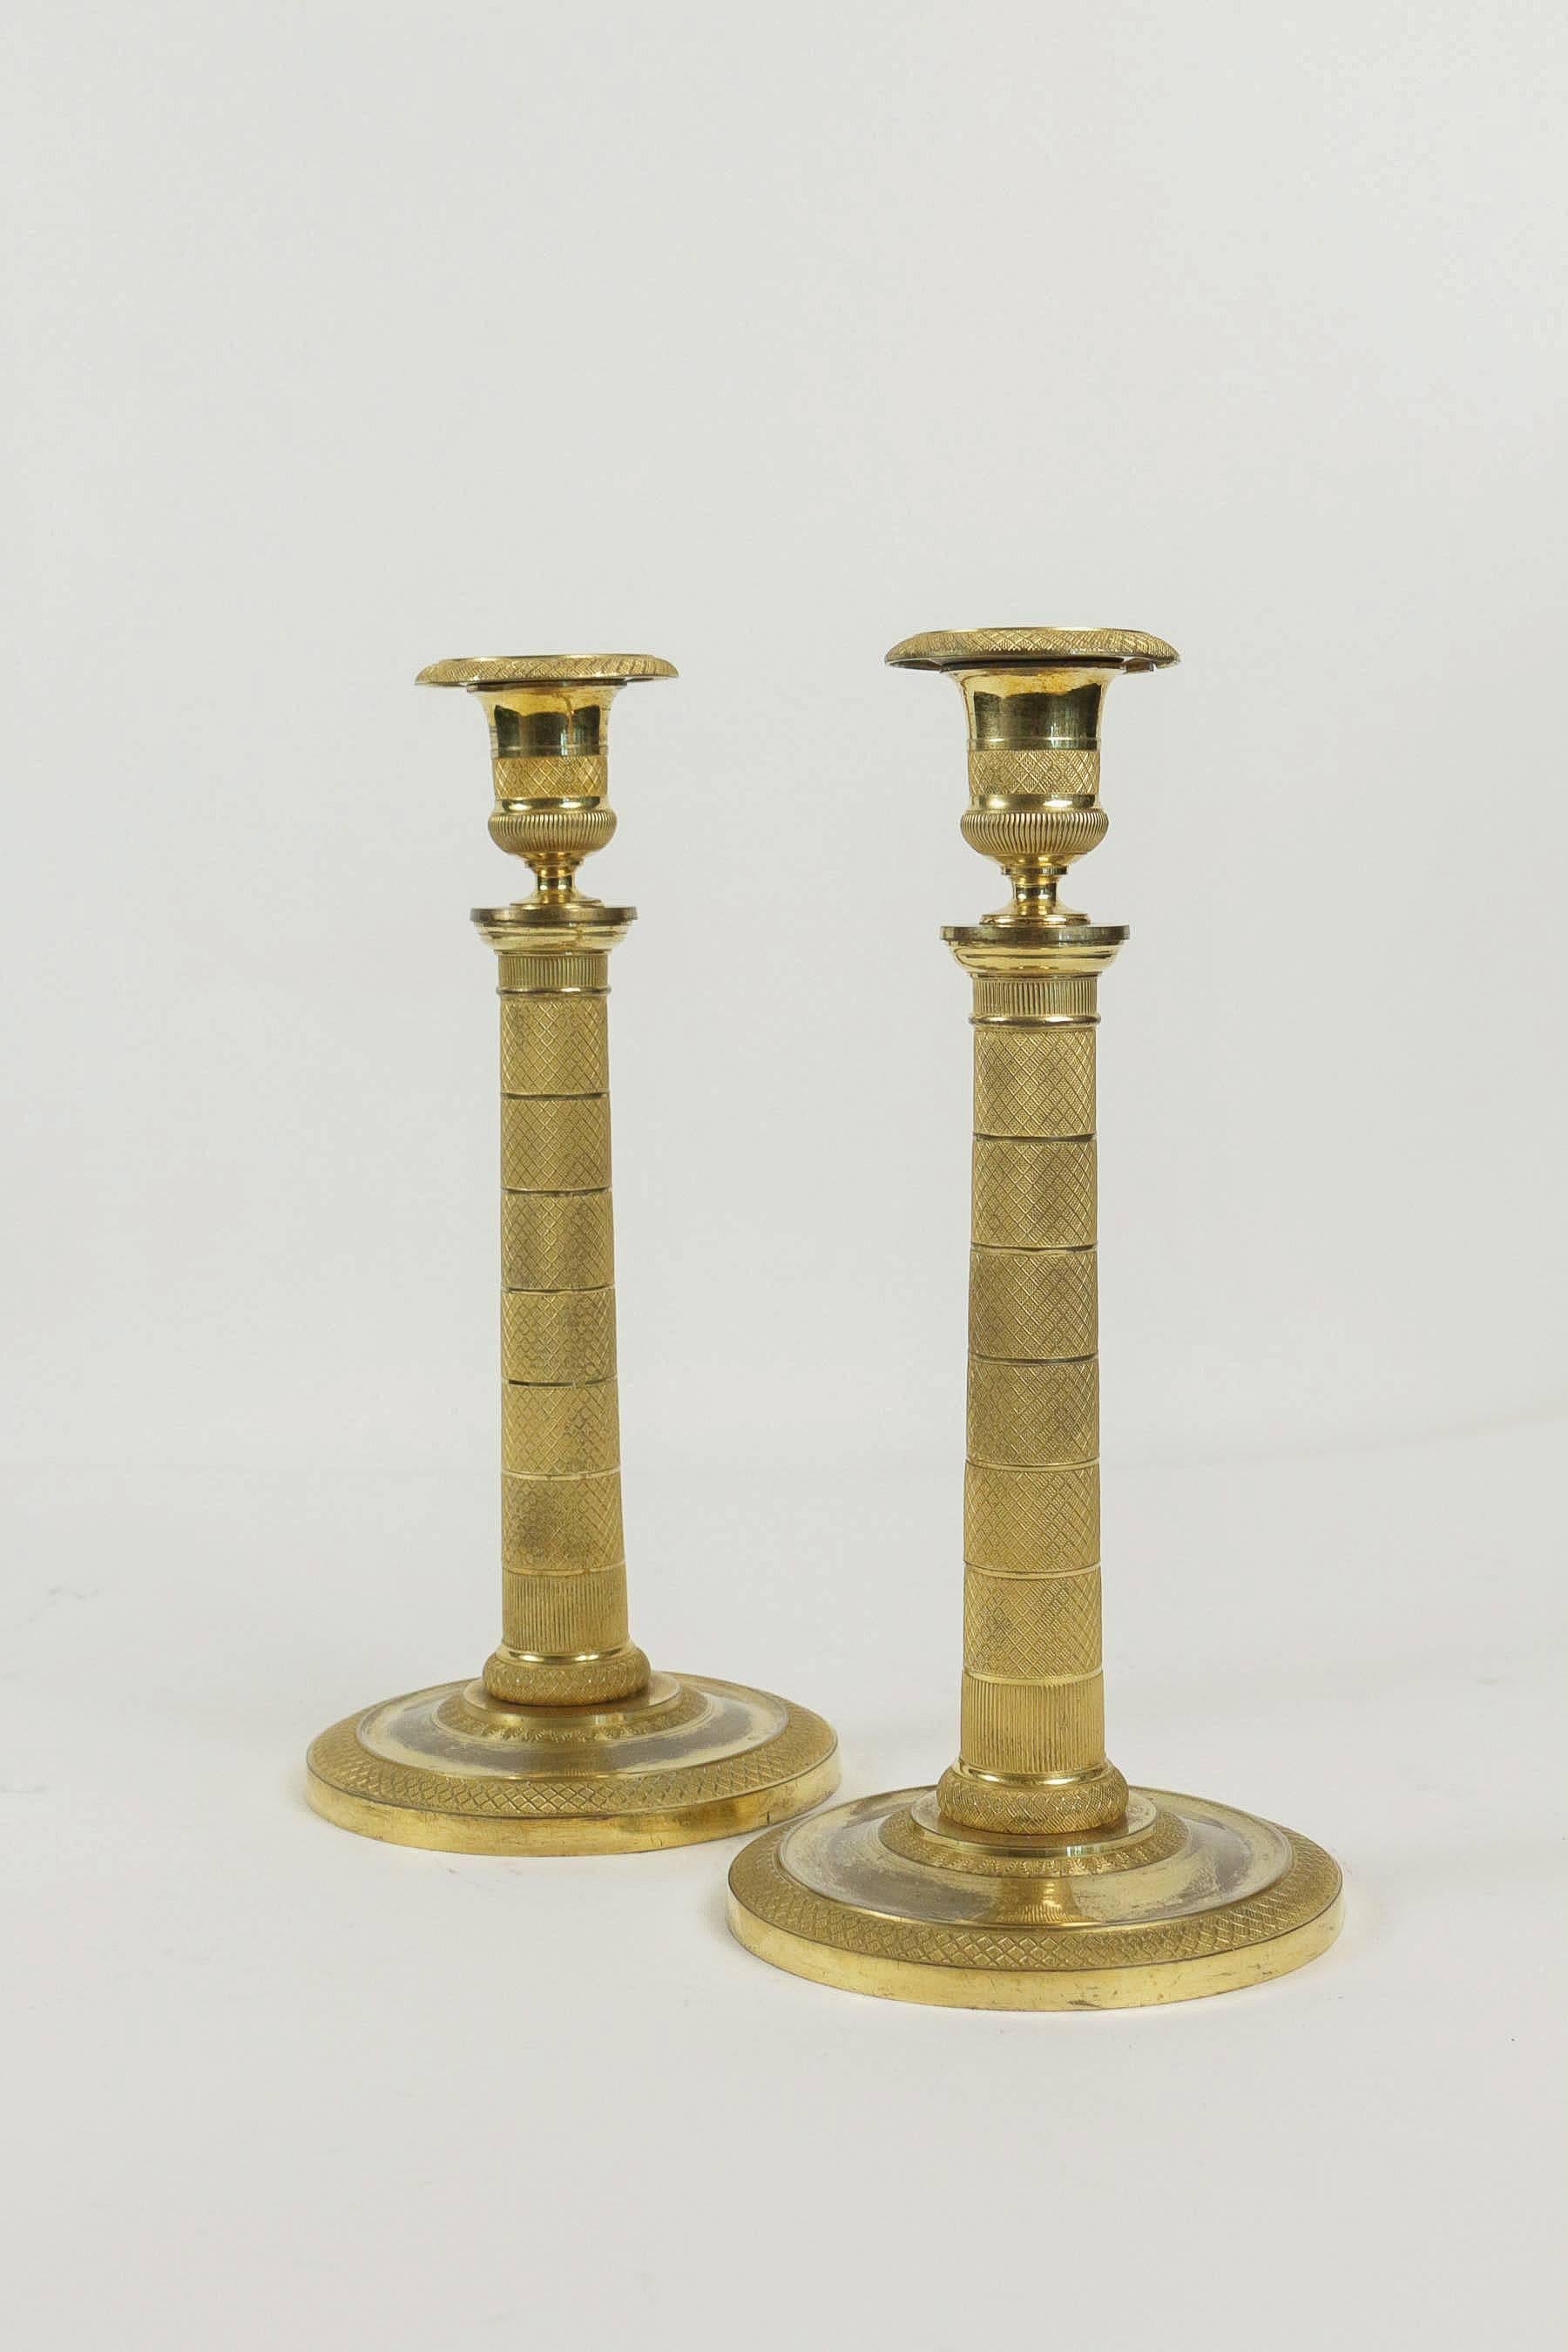 Gilt Early 19th Century Pair of French Empire Period Ormolu Candlesticks, circa 1810